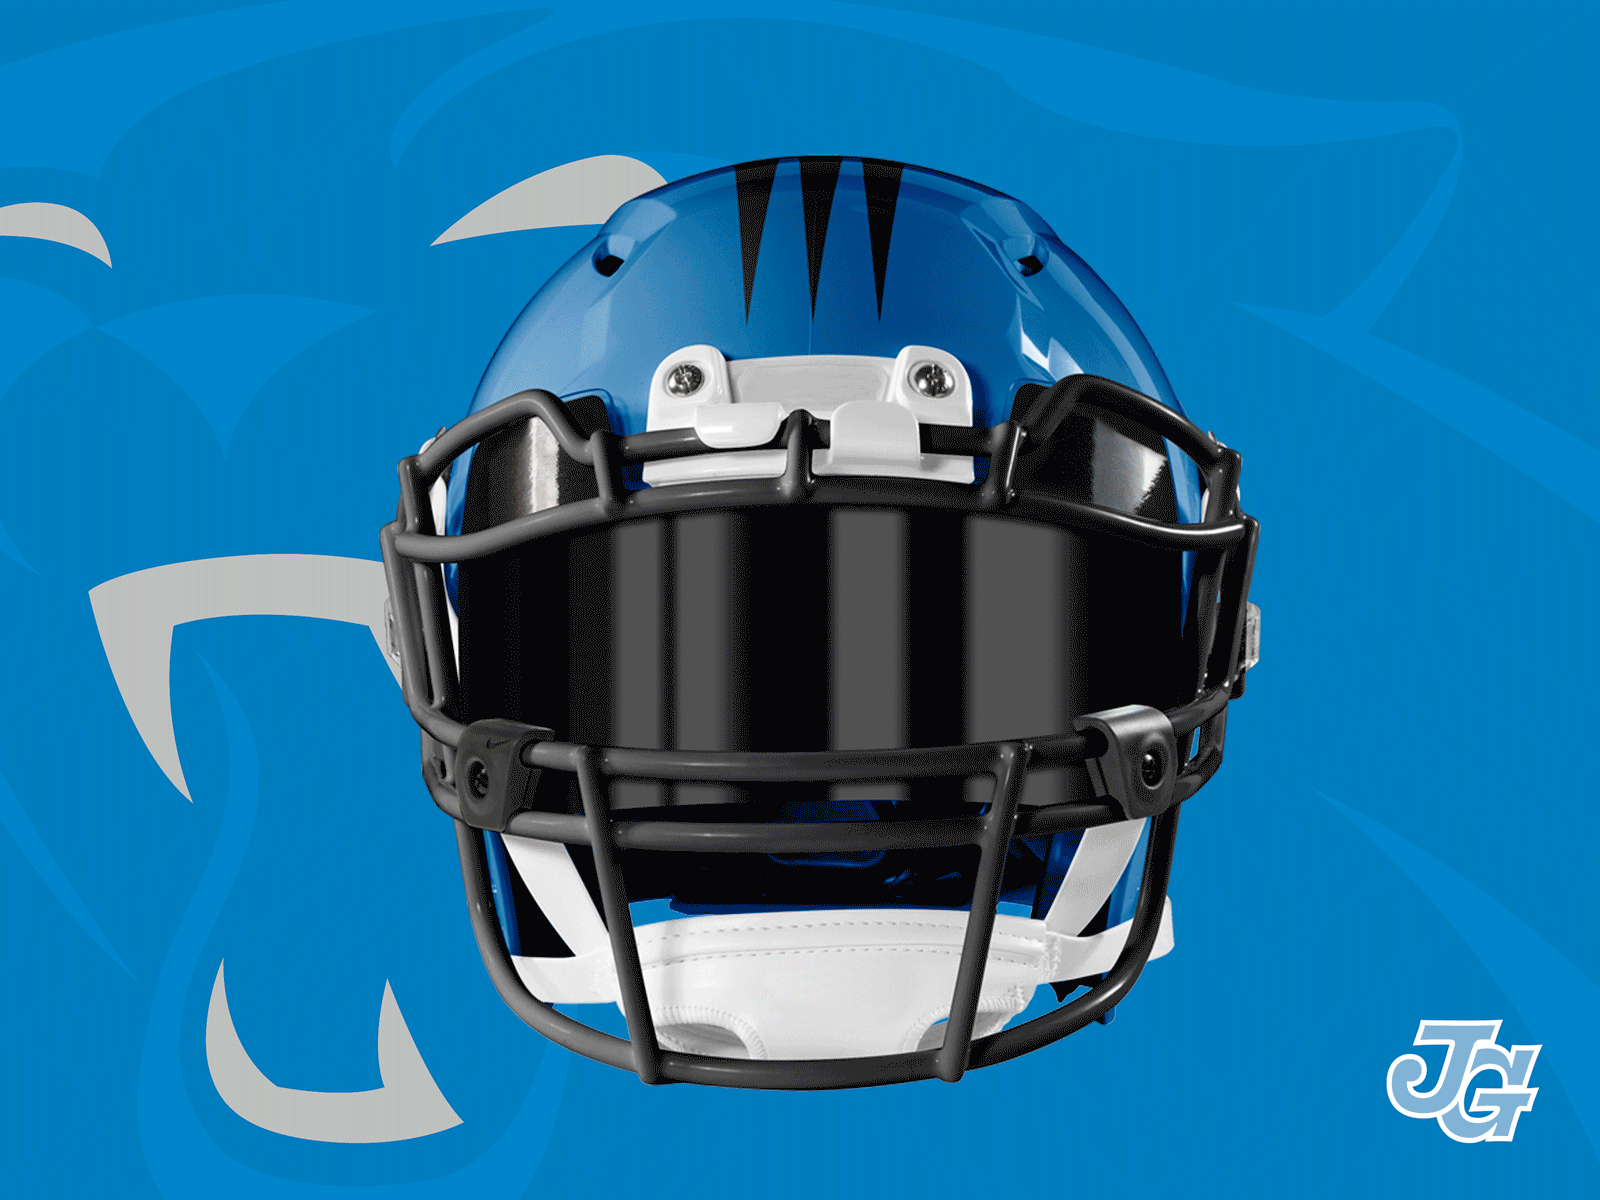 Carolina Panthers - Helmet Rotate by Jordan Grimes on Dribbble